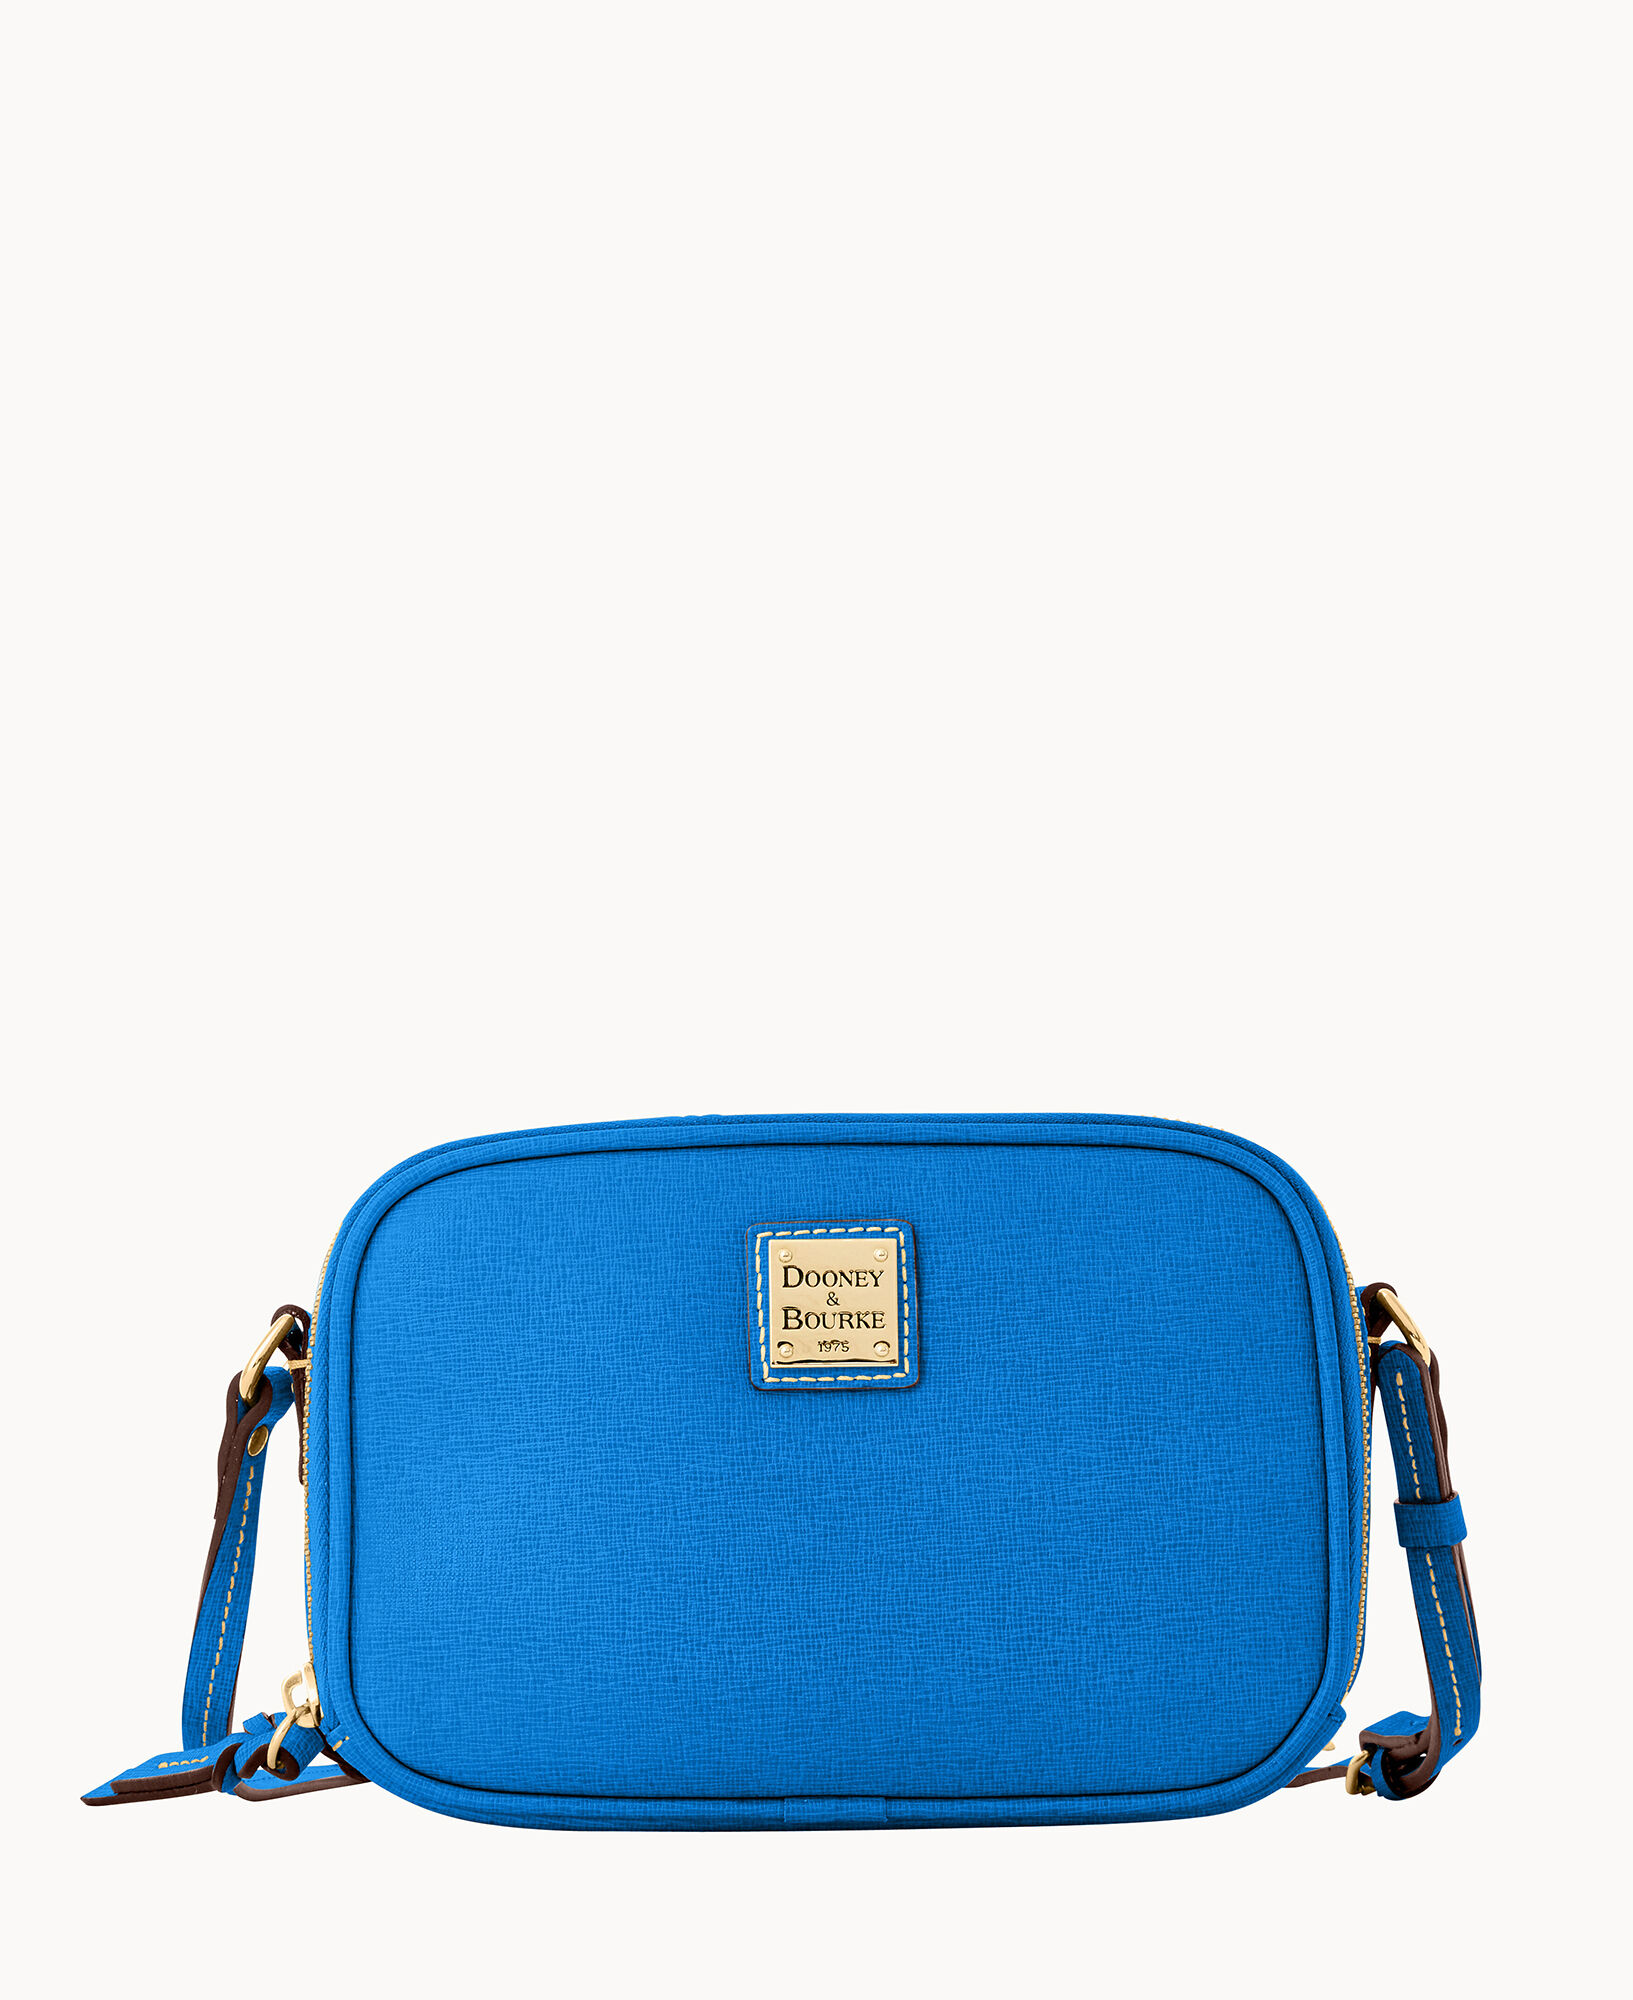 Dooney & Bourke Marine Blue 💙 Saffiano Leather Sydney Satchel